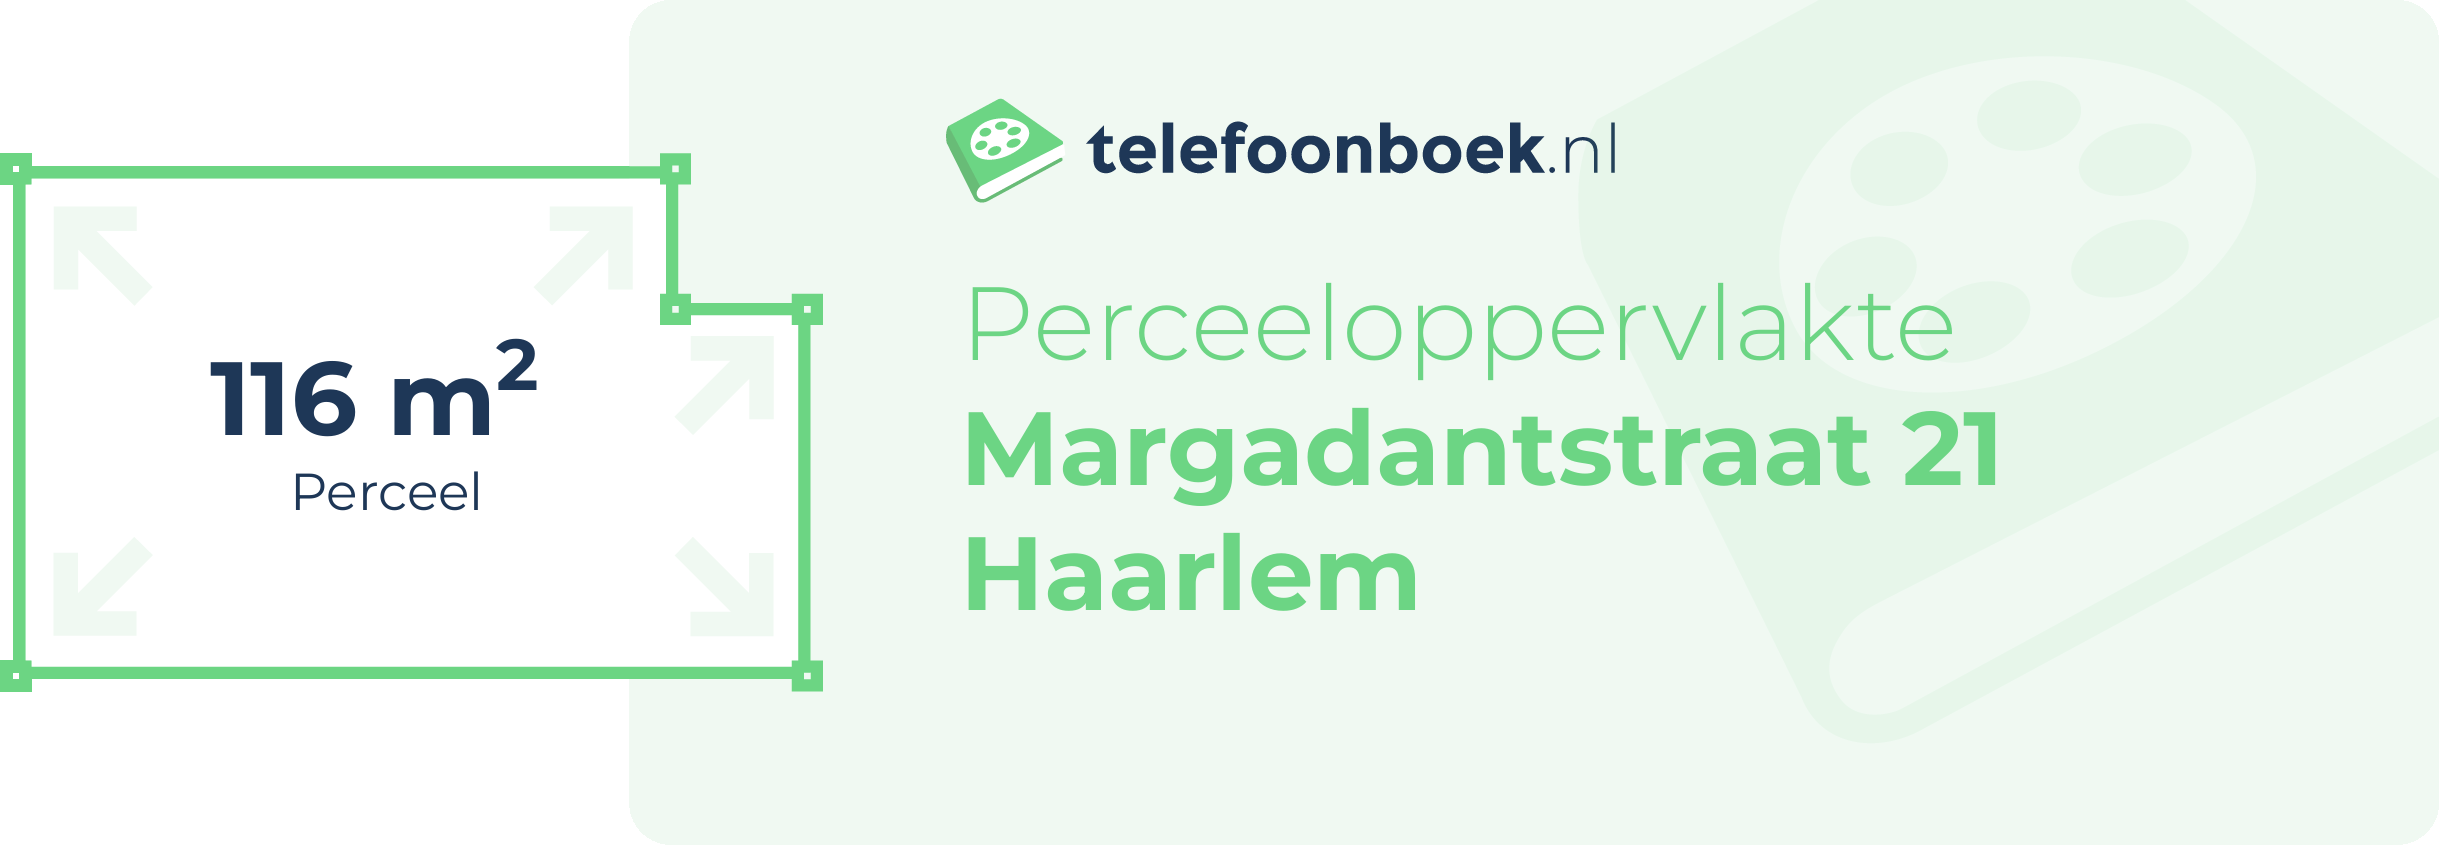 Perceeloppervlakte Margadantstraat 21 Haarlem